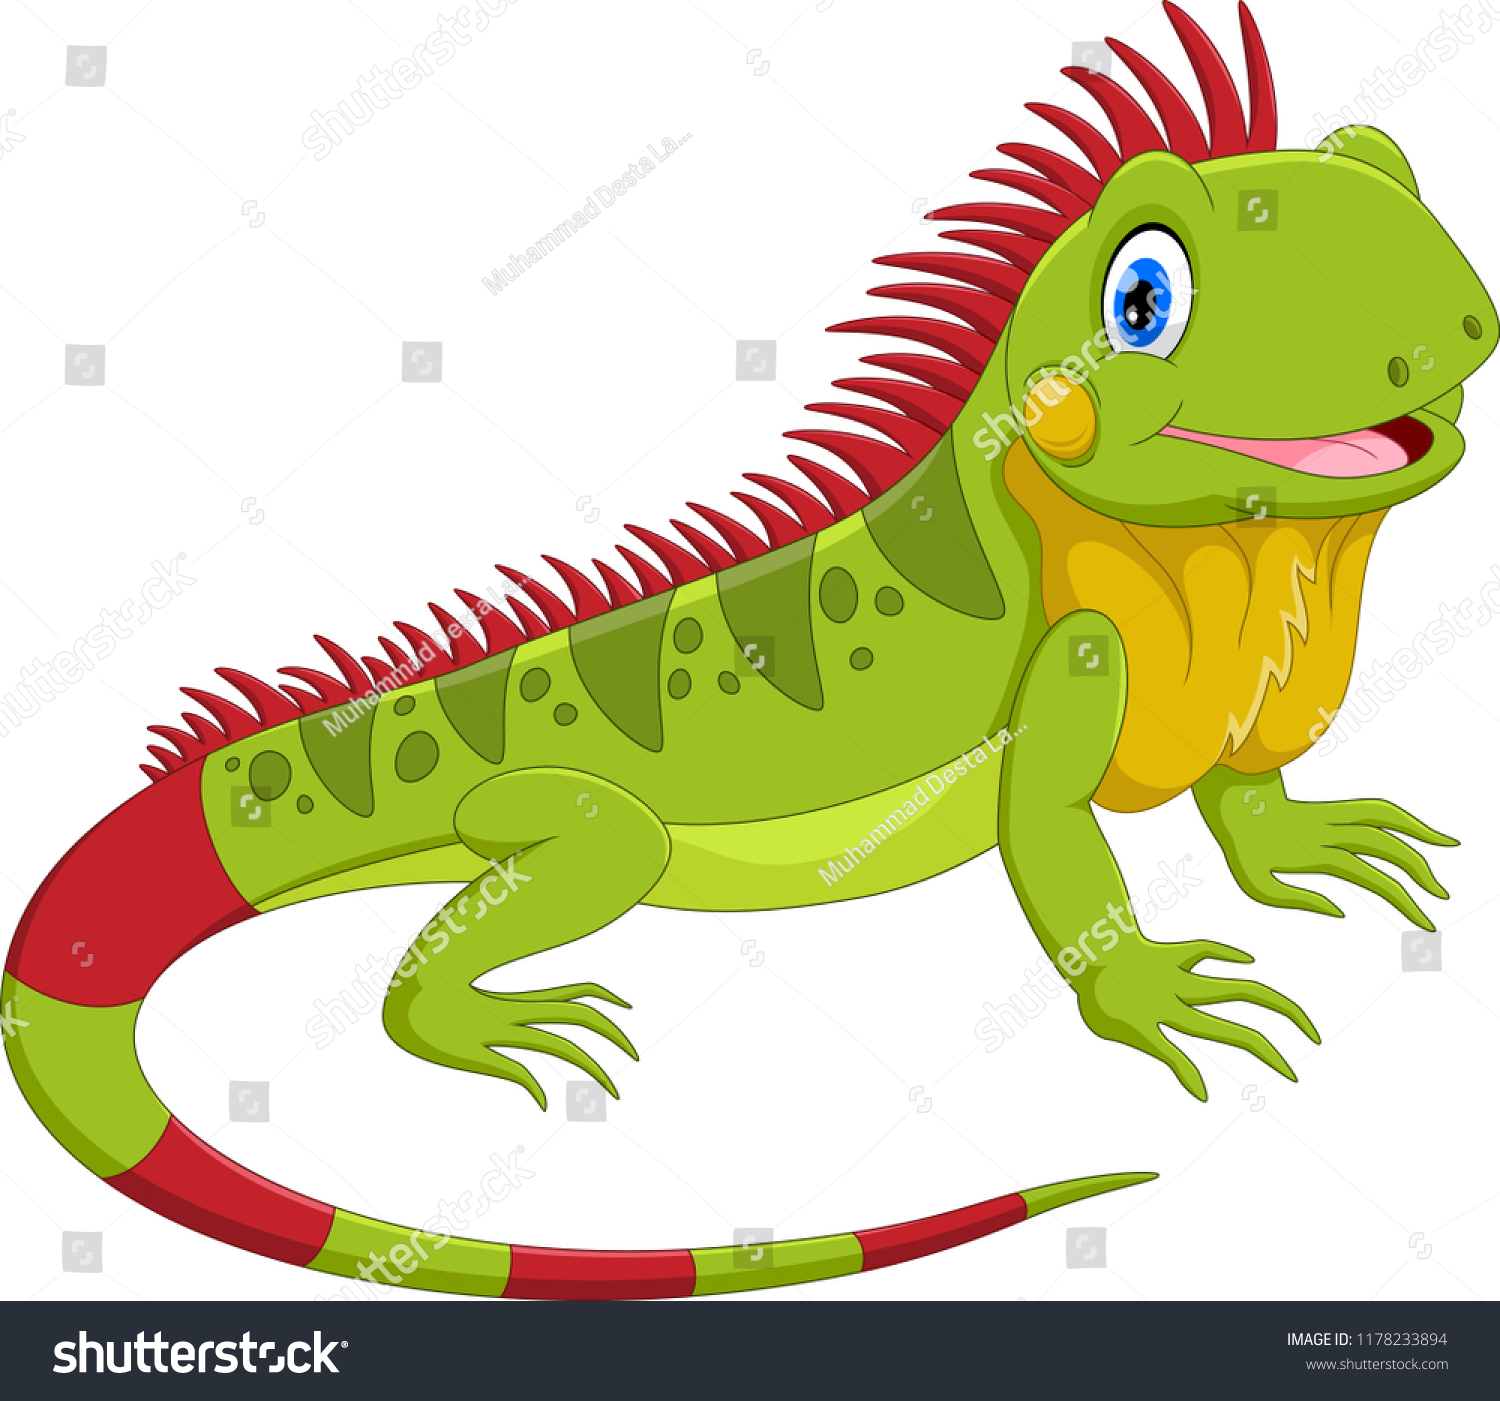 Iguana cartoon Images, Stock Photos & Vectors | Shutterstock